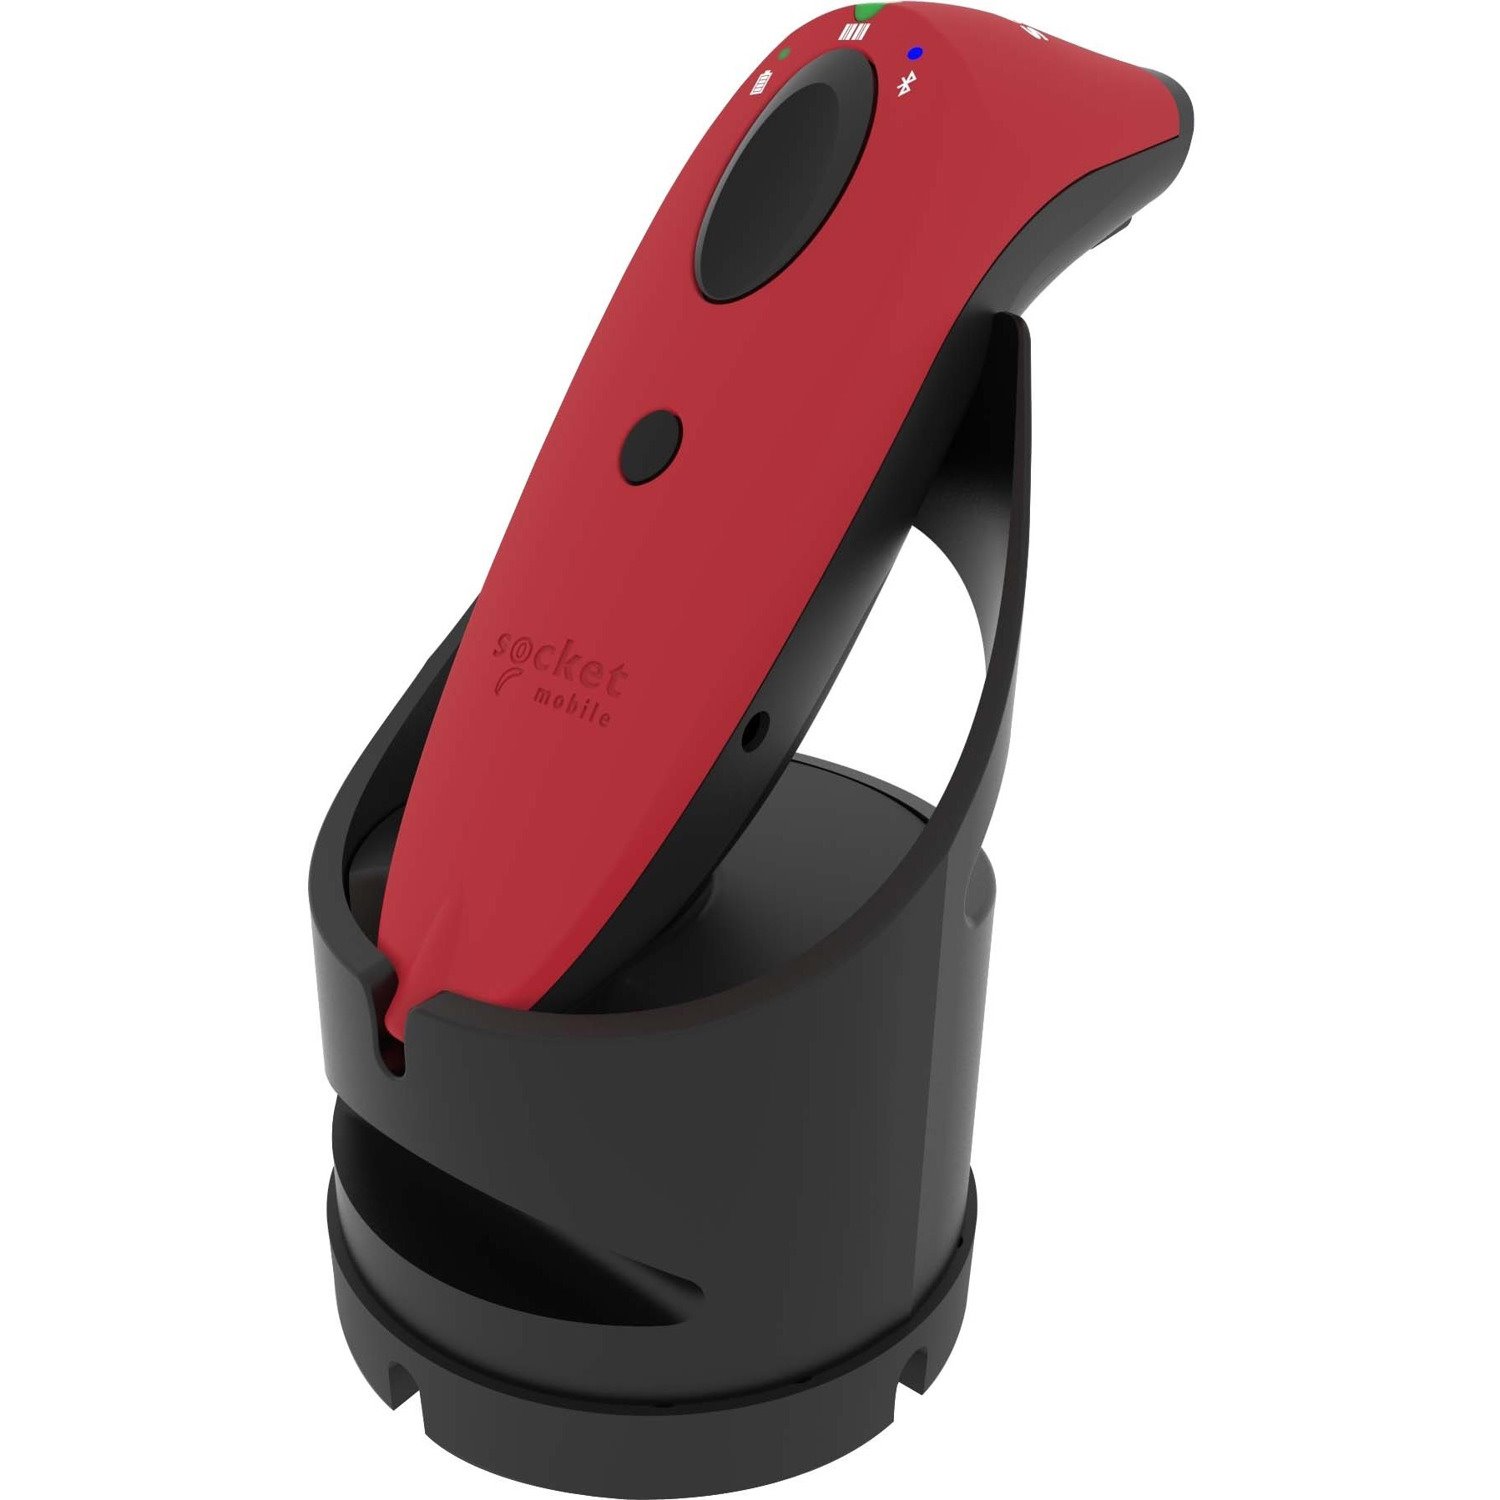 Socket Mobile SocketScan S700 Handheld Barcode Scanner - Wireless Connectivity - Red, Black